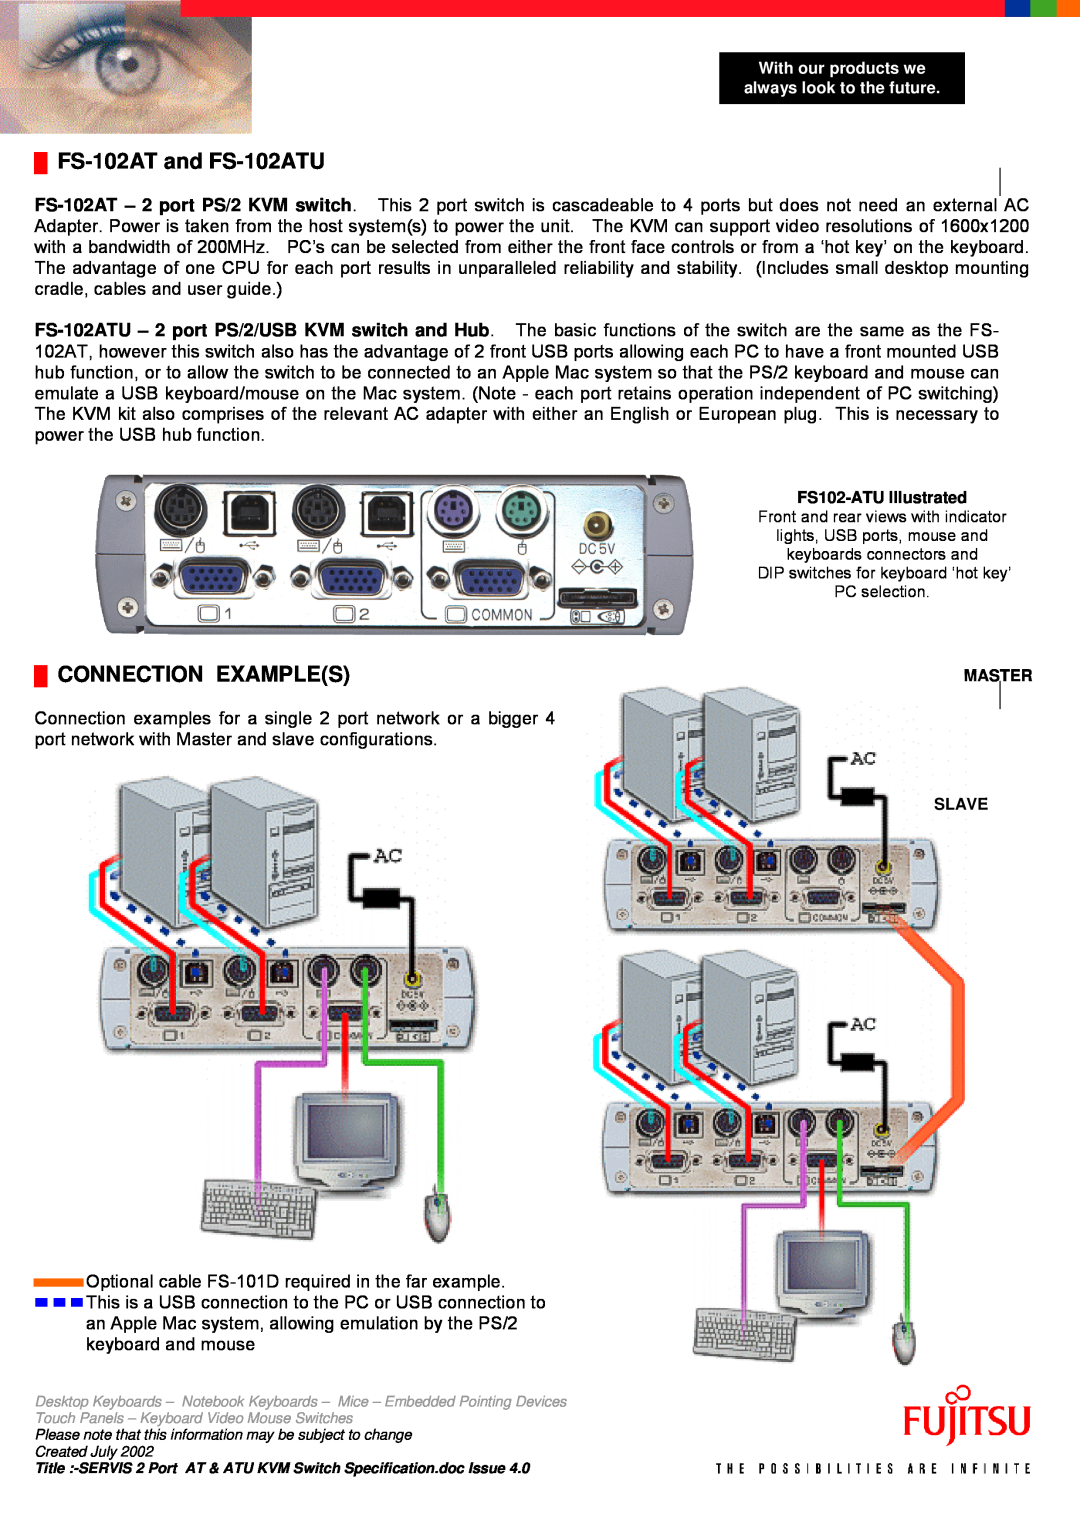 Fujitsu FS 102ATU manual FS-102AT and FS-102ATU, Connection Examples, FS102-ATU Illustrated, Master, Slave 